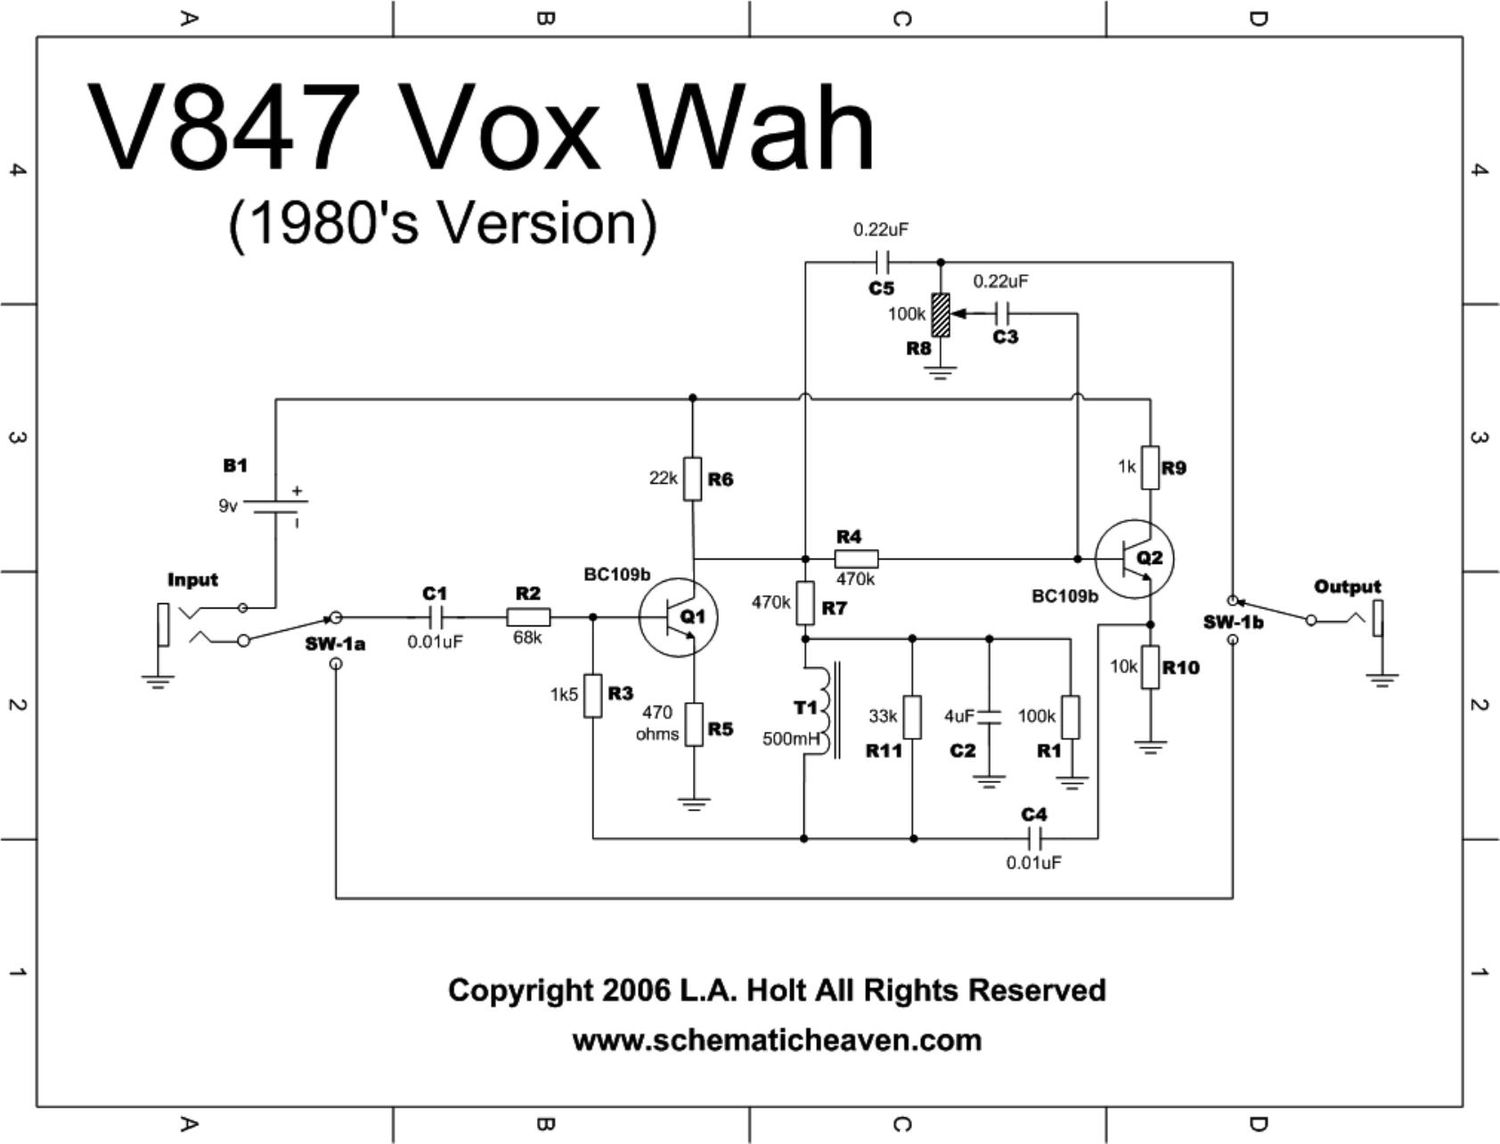 vox 847 original wah 1986 schematic